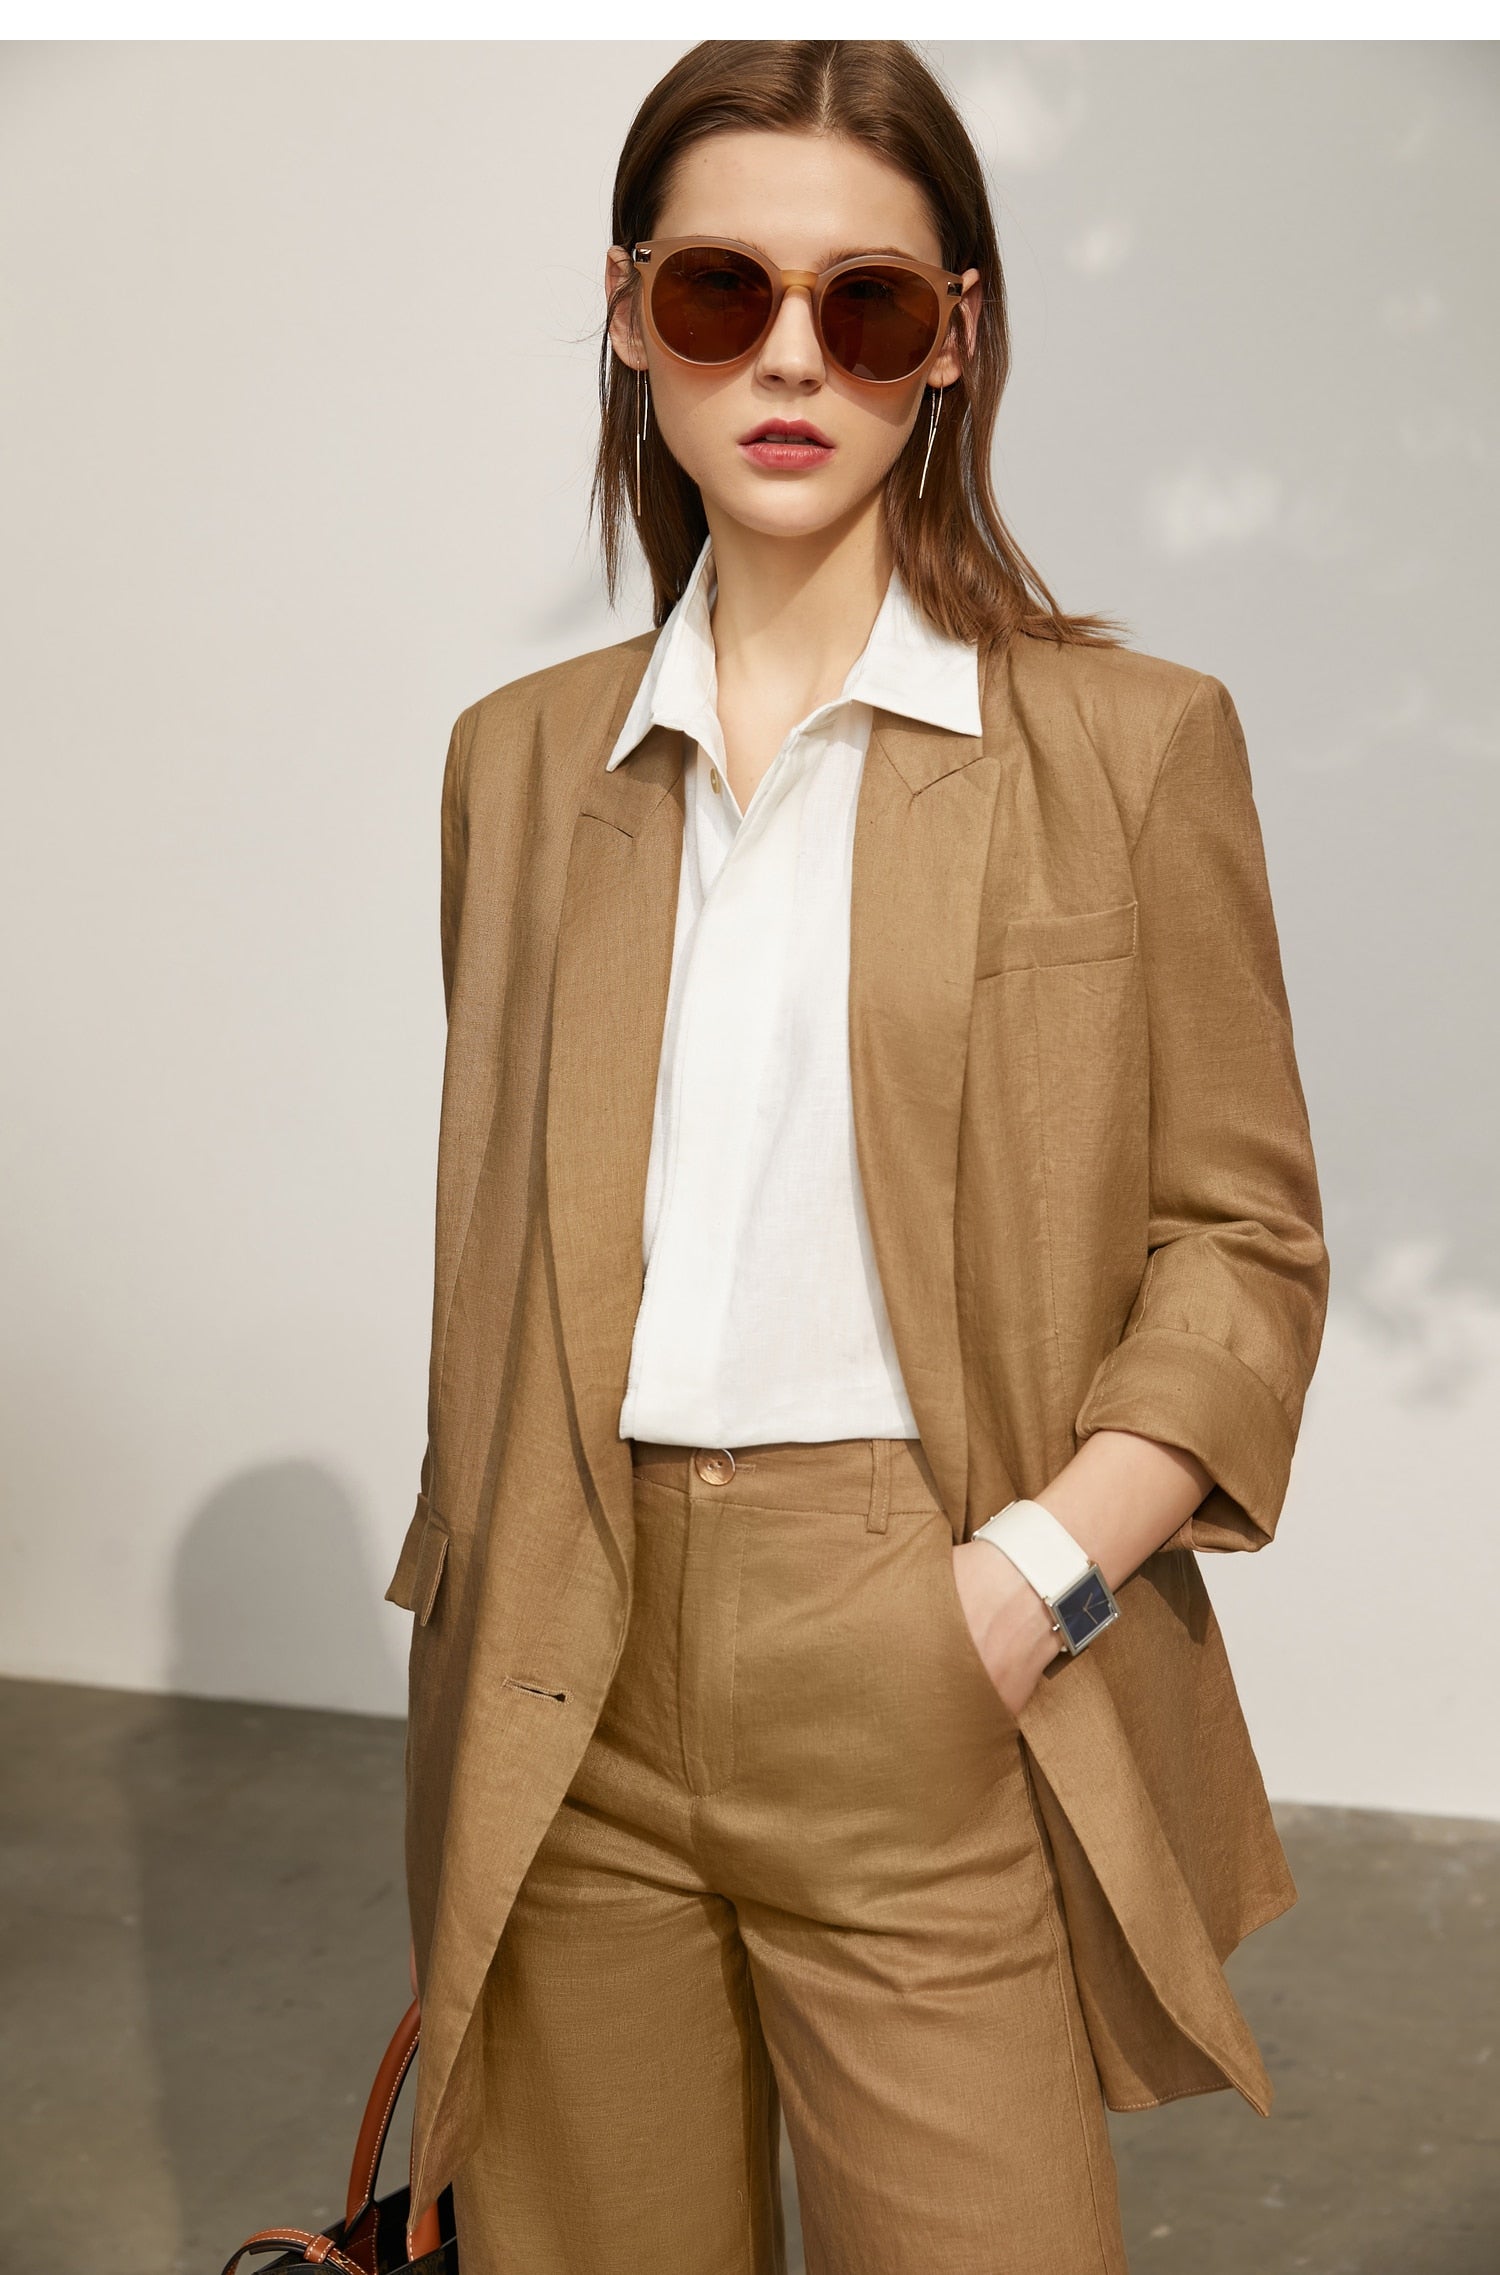 GirlKino Summer Fashion Women's Suit Coat Offical Lady 100%Linen Solid Blazer Women Causal Loose Women's Pants 12140237